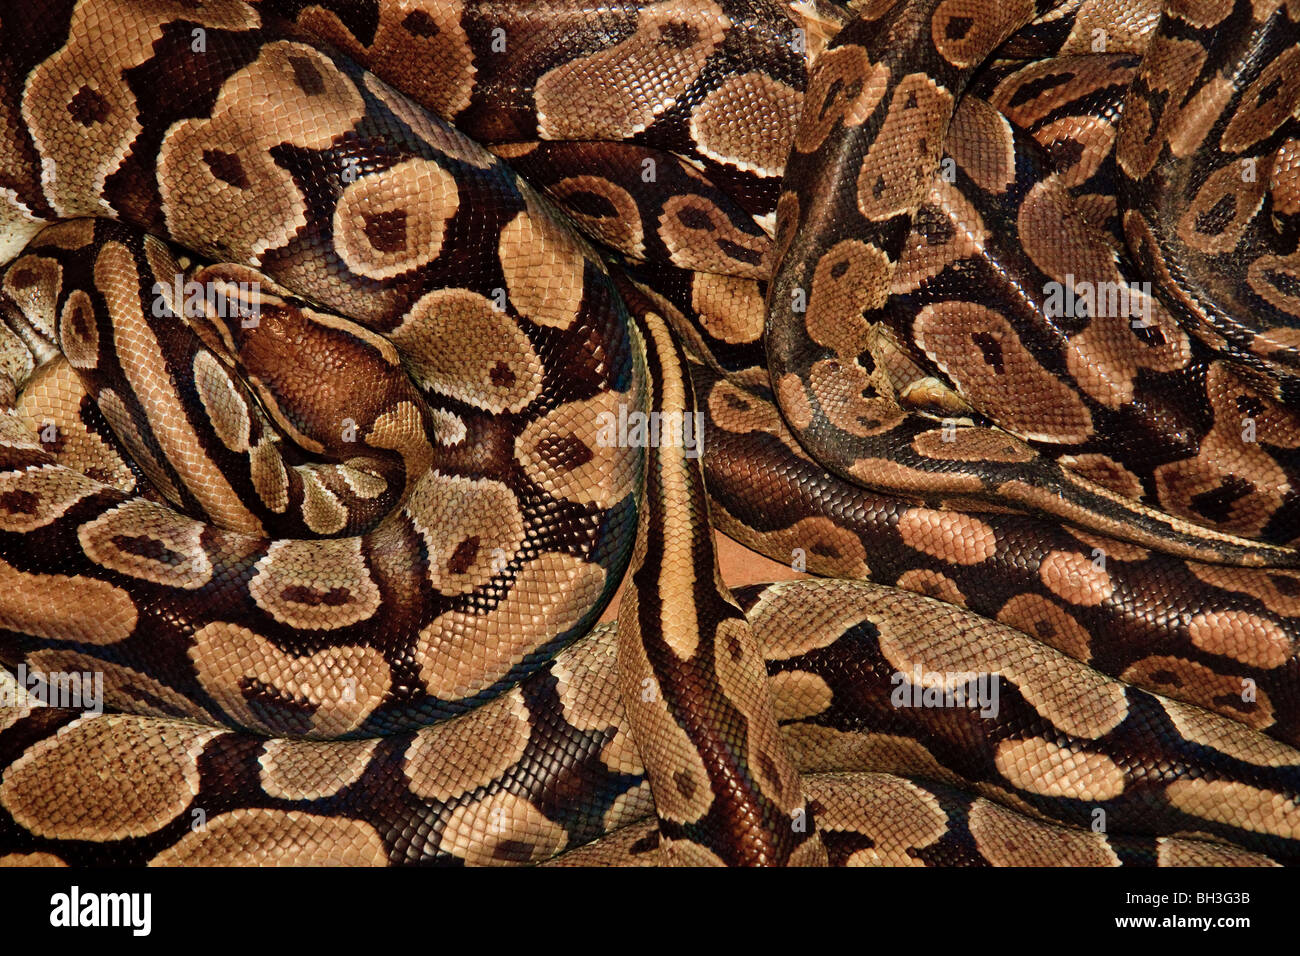 Africa Benin Ouidah Python Temple Reptile Snakes Stock Photo